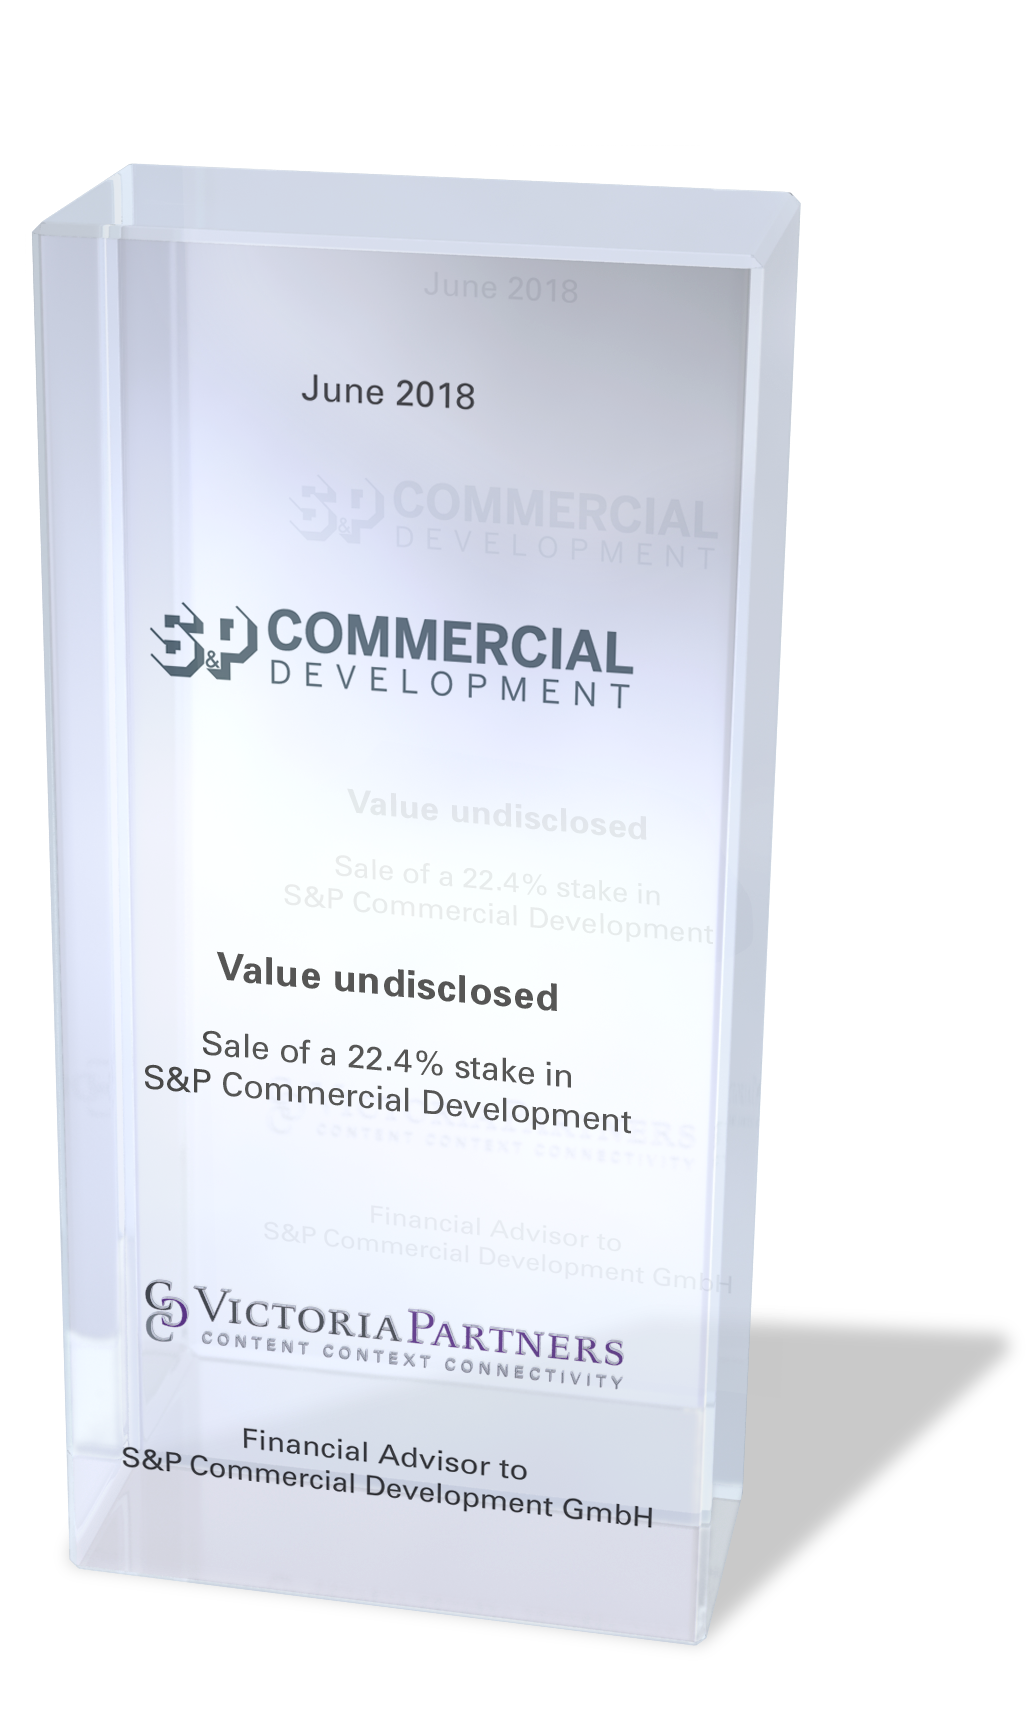 VICTORIAPARTNERS - Financial Advisor to S&P Commercial Development GmbH - June 2018